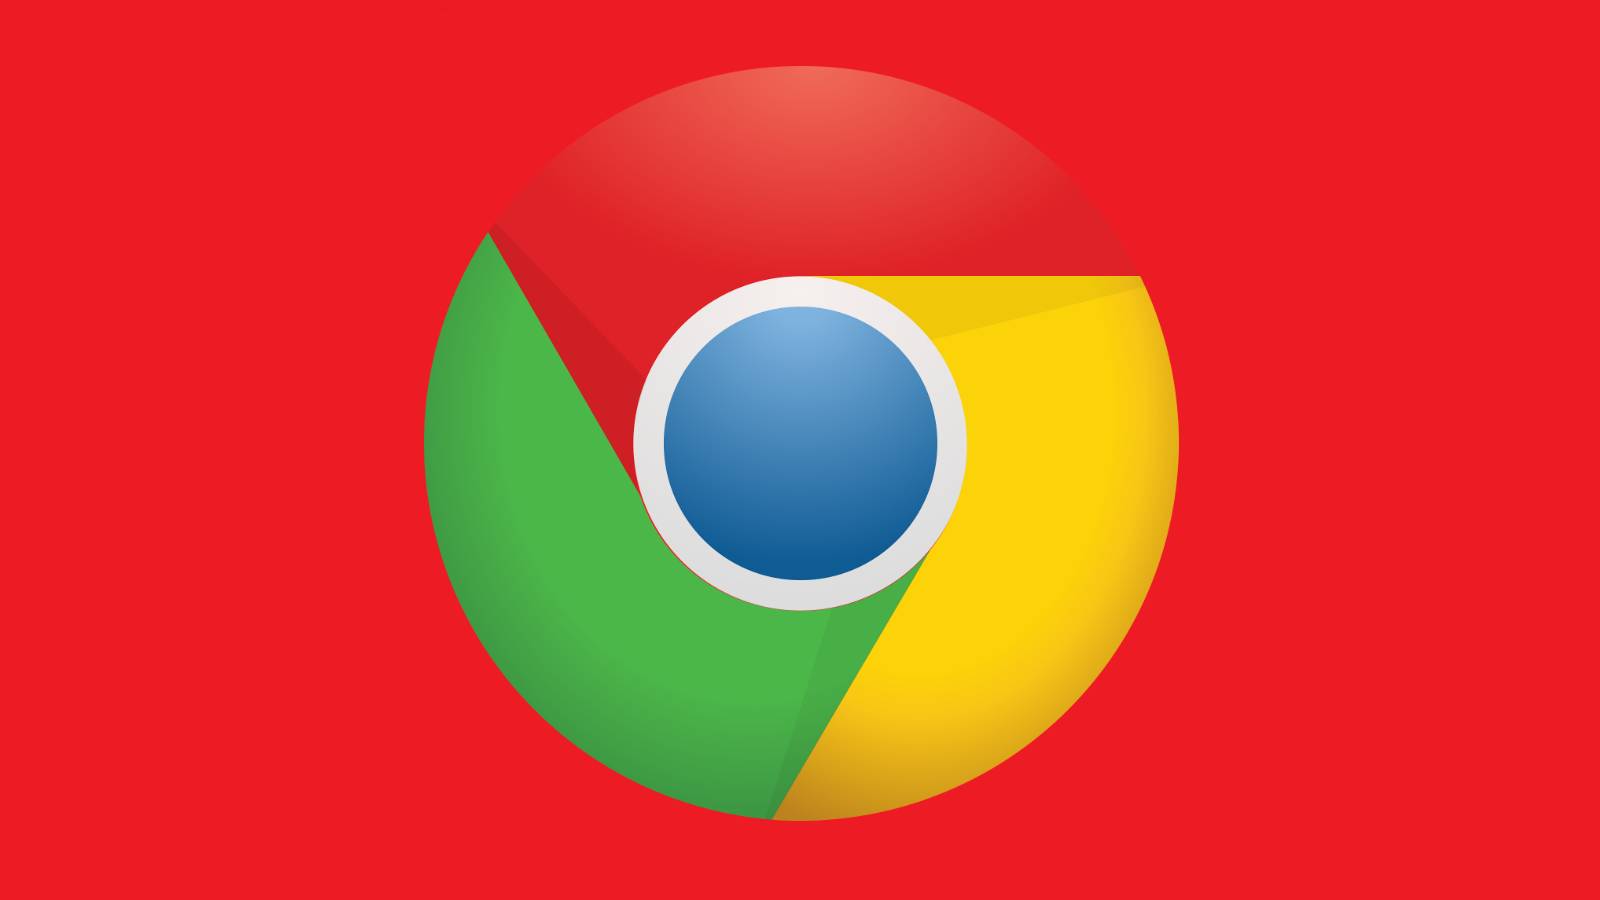 Google ENORMES cambios Google Chrome en todo el mundo